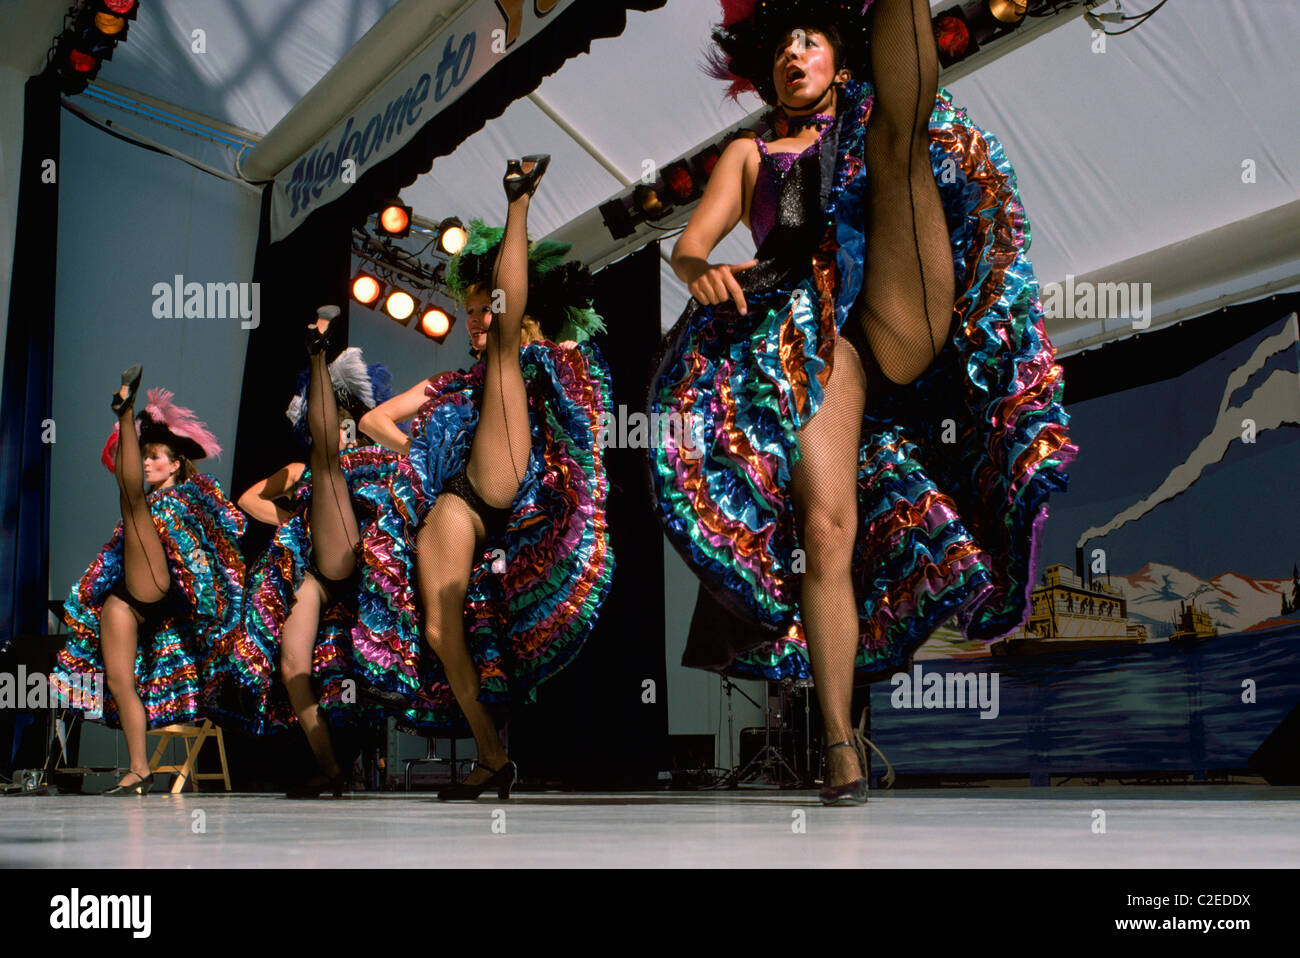 https://c8.alamy.com/comp/C2EDDX/cancan-can-can-girls-dancers-dancing-on-stage-C2EDDX.jpg